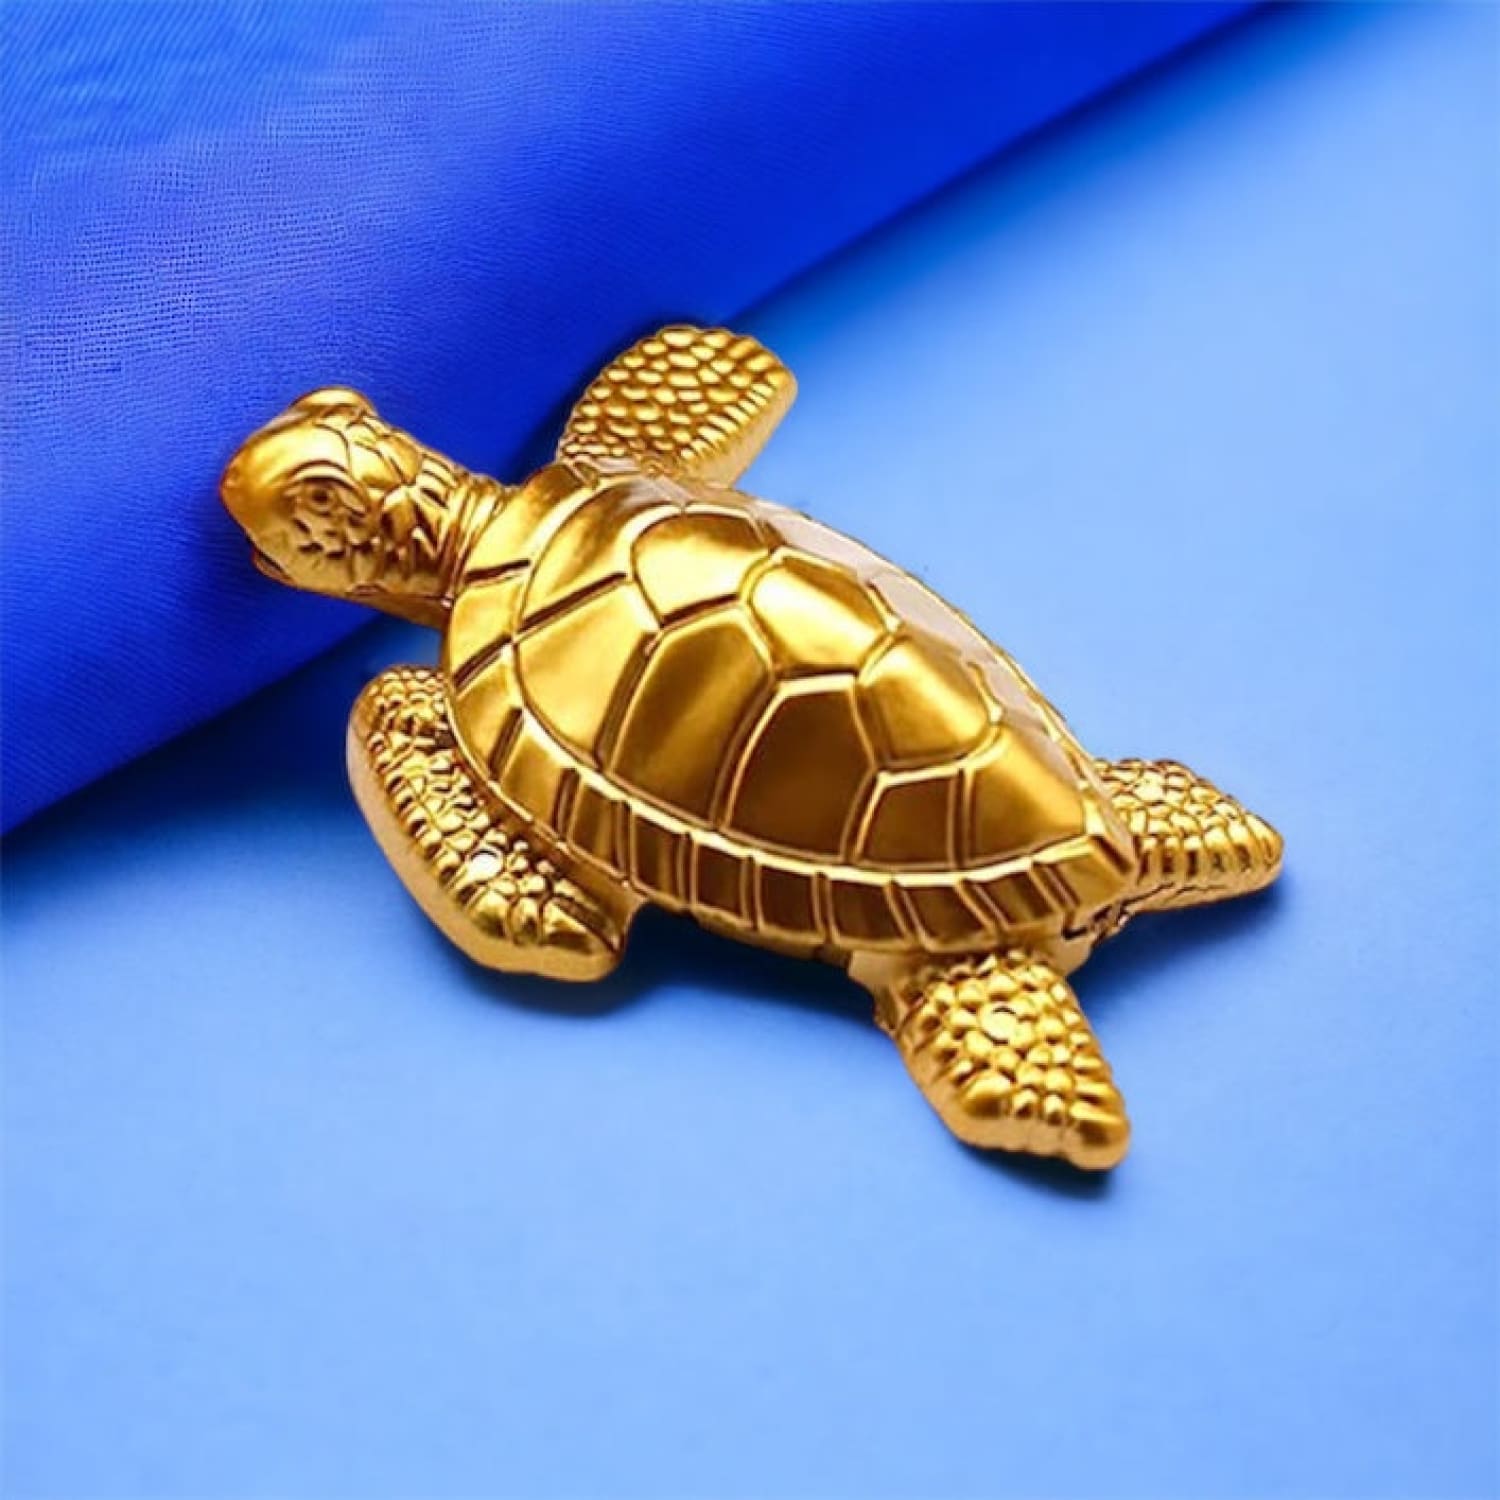 Gold Turtle Novelty Lighter 0623 - Q223 - Wendyjune - Xemma